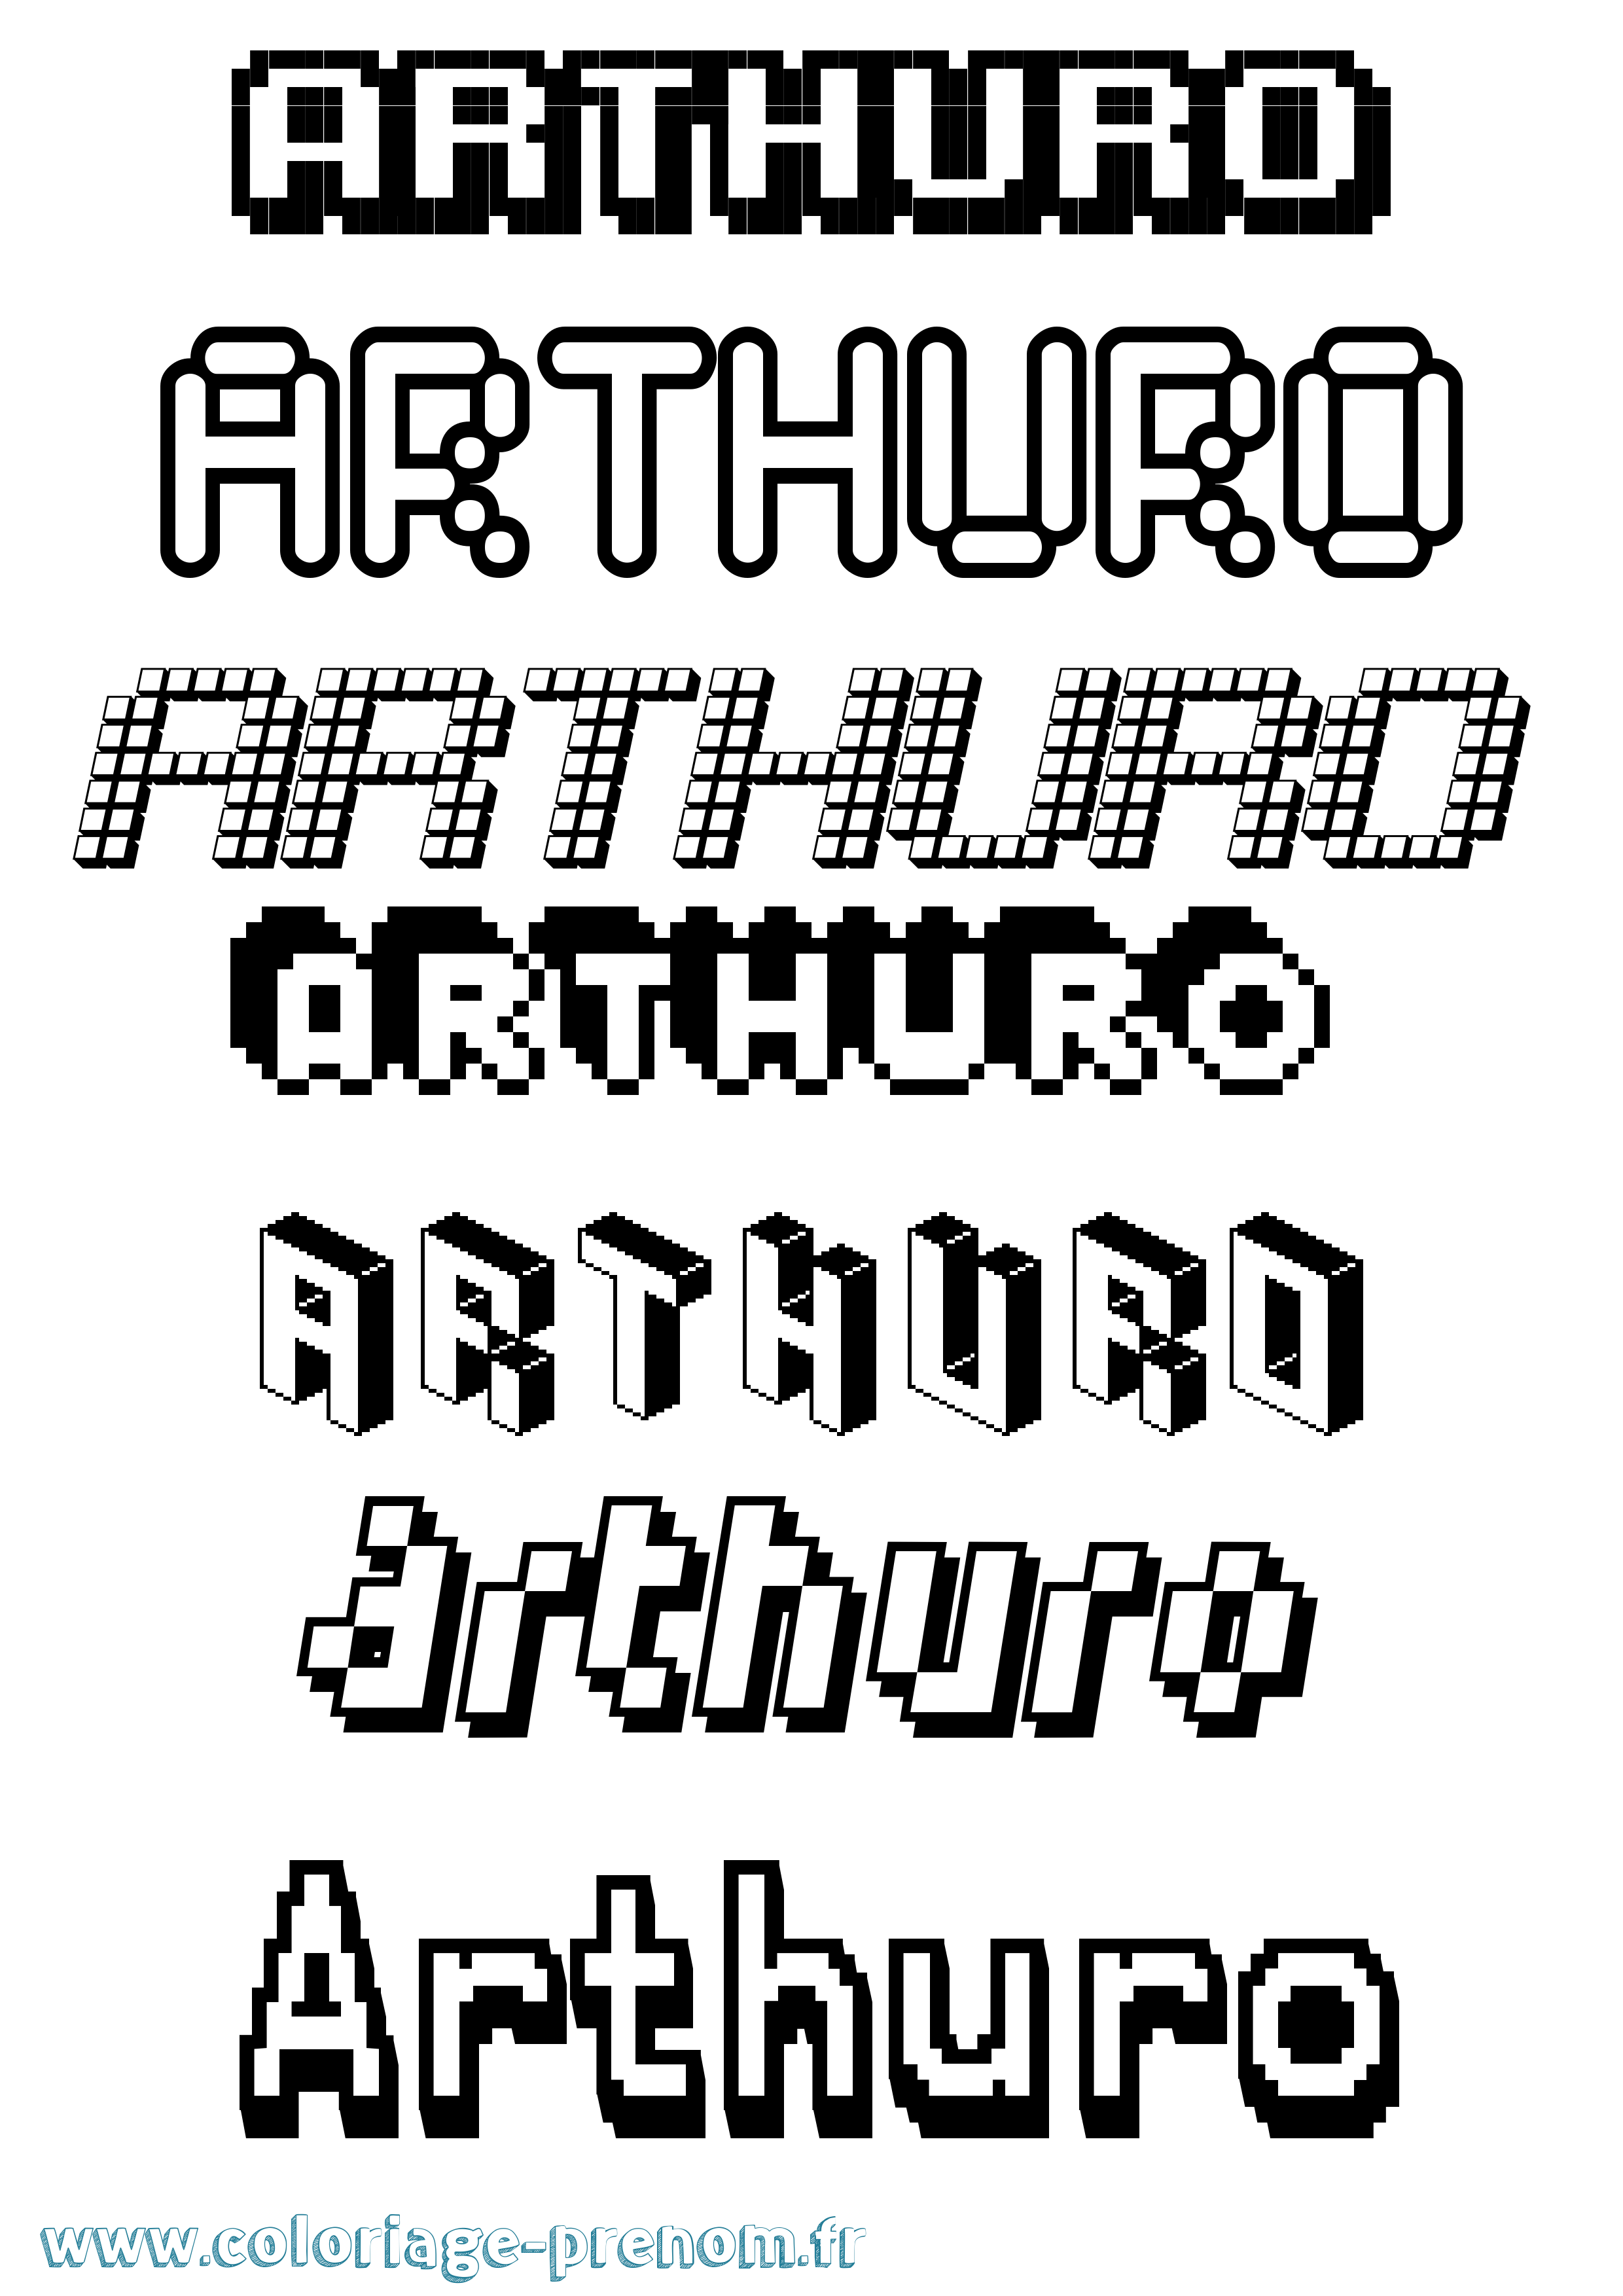 Coloriage prénom Arthuro Pixel